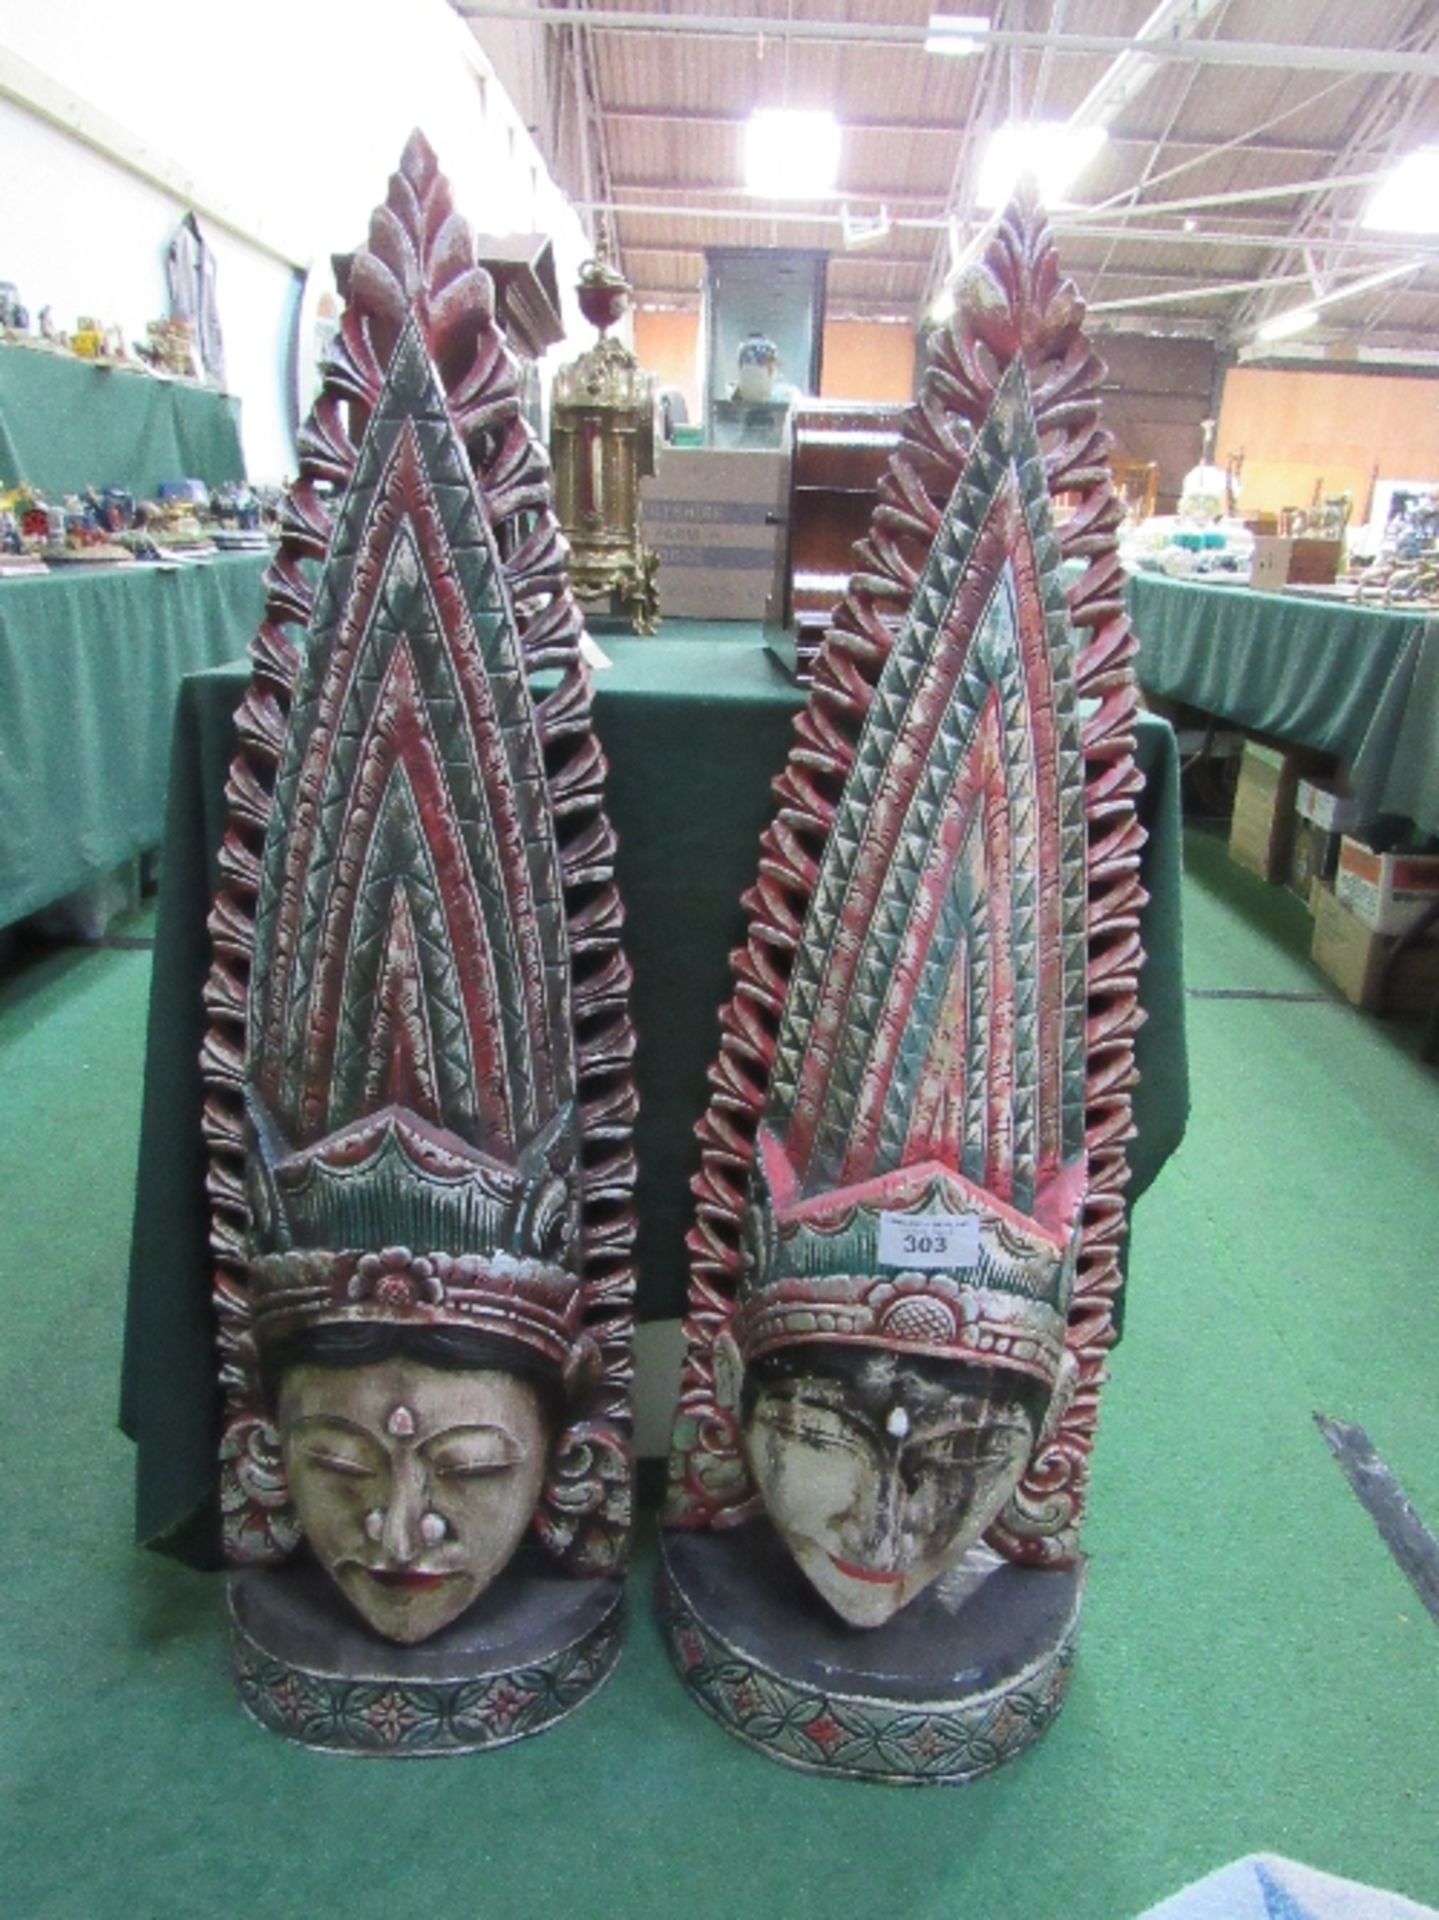 2 painted wood ethnic-style masks, 44" high